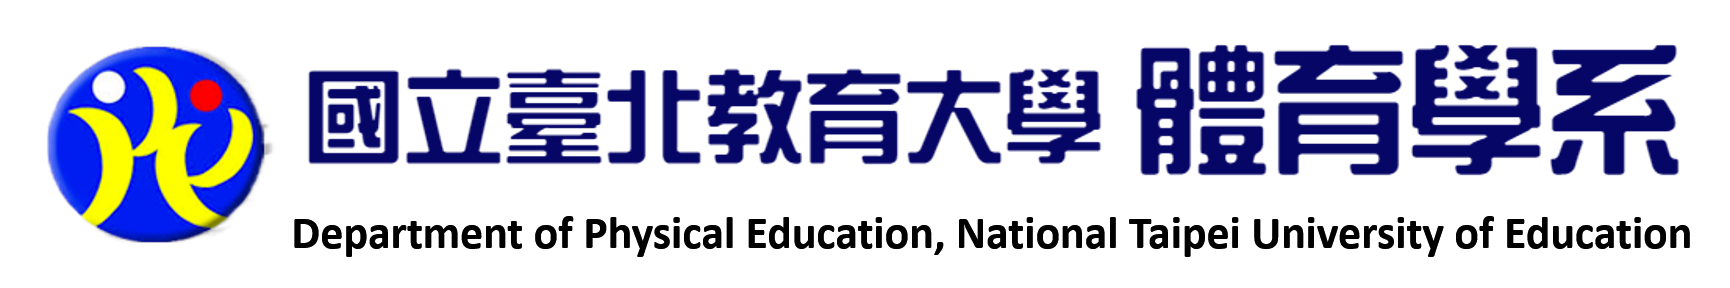 National Taipei University of Education Departmart of Physical Education